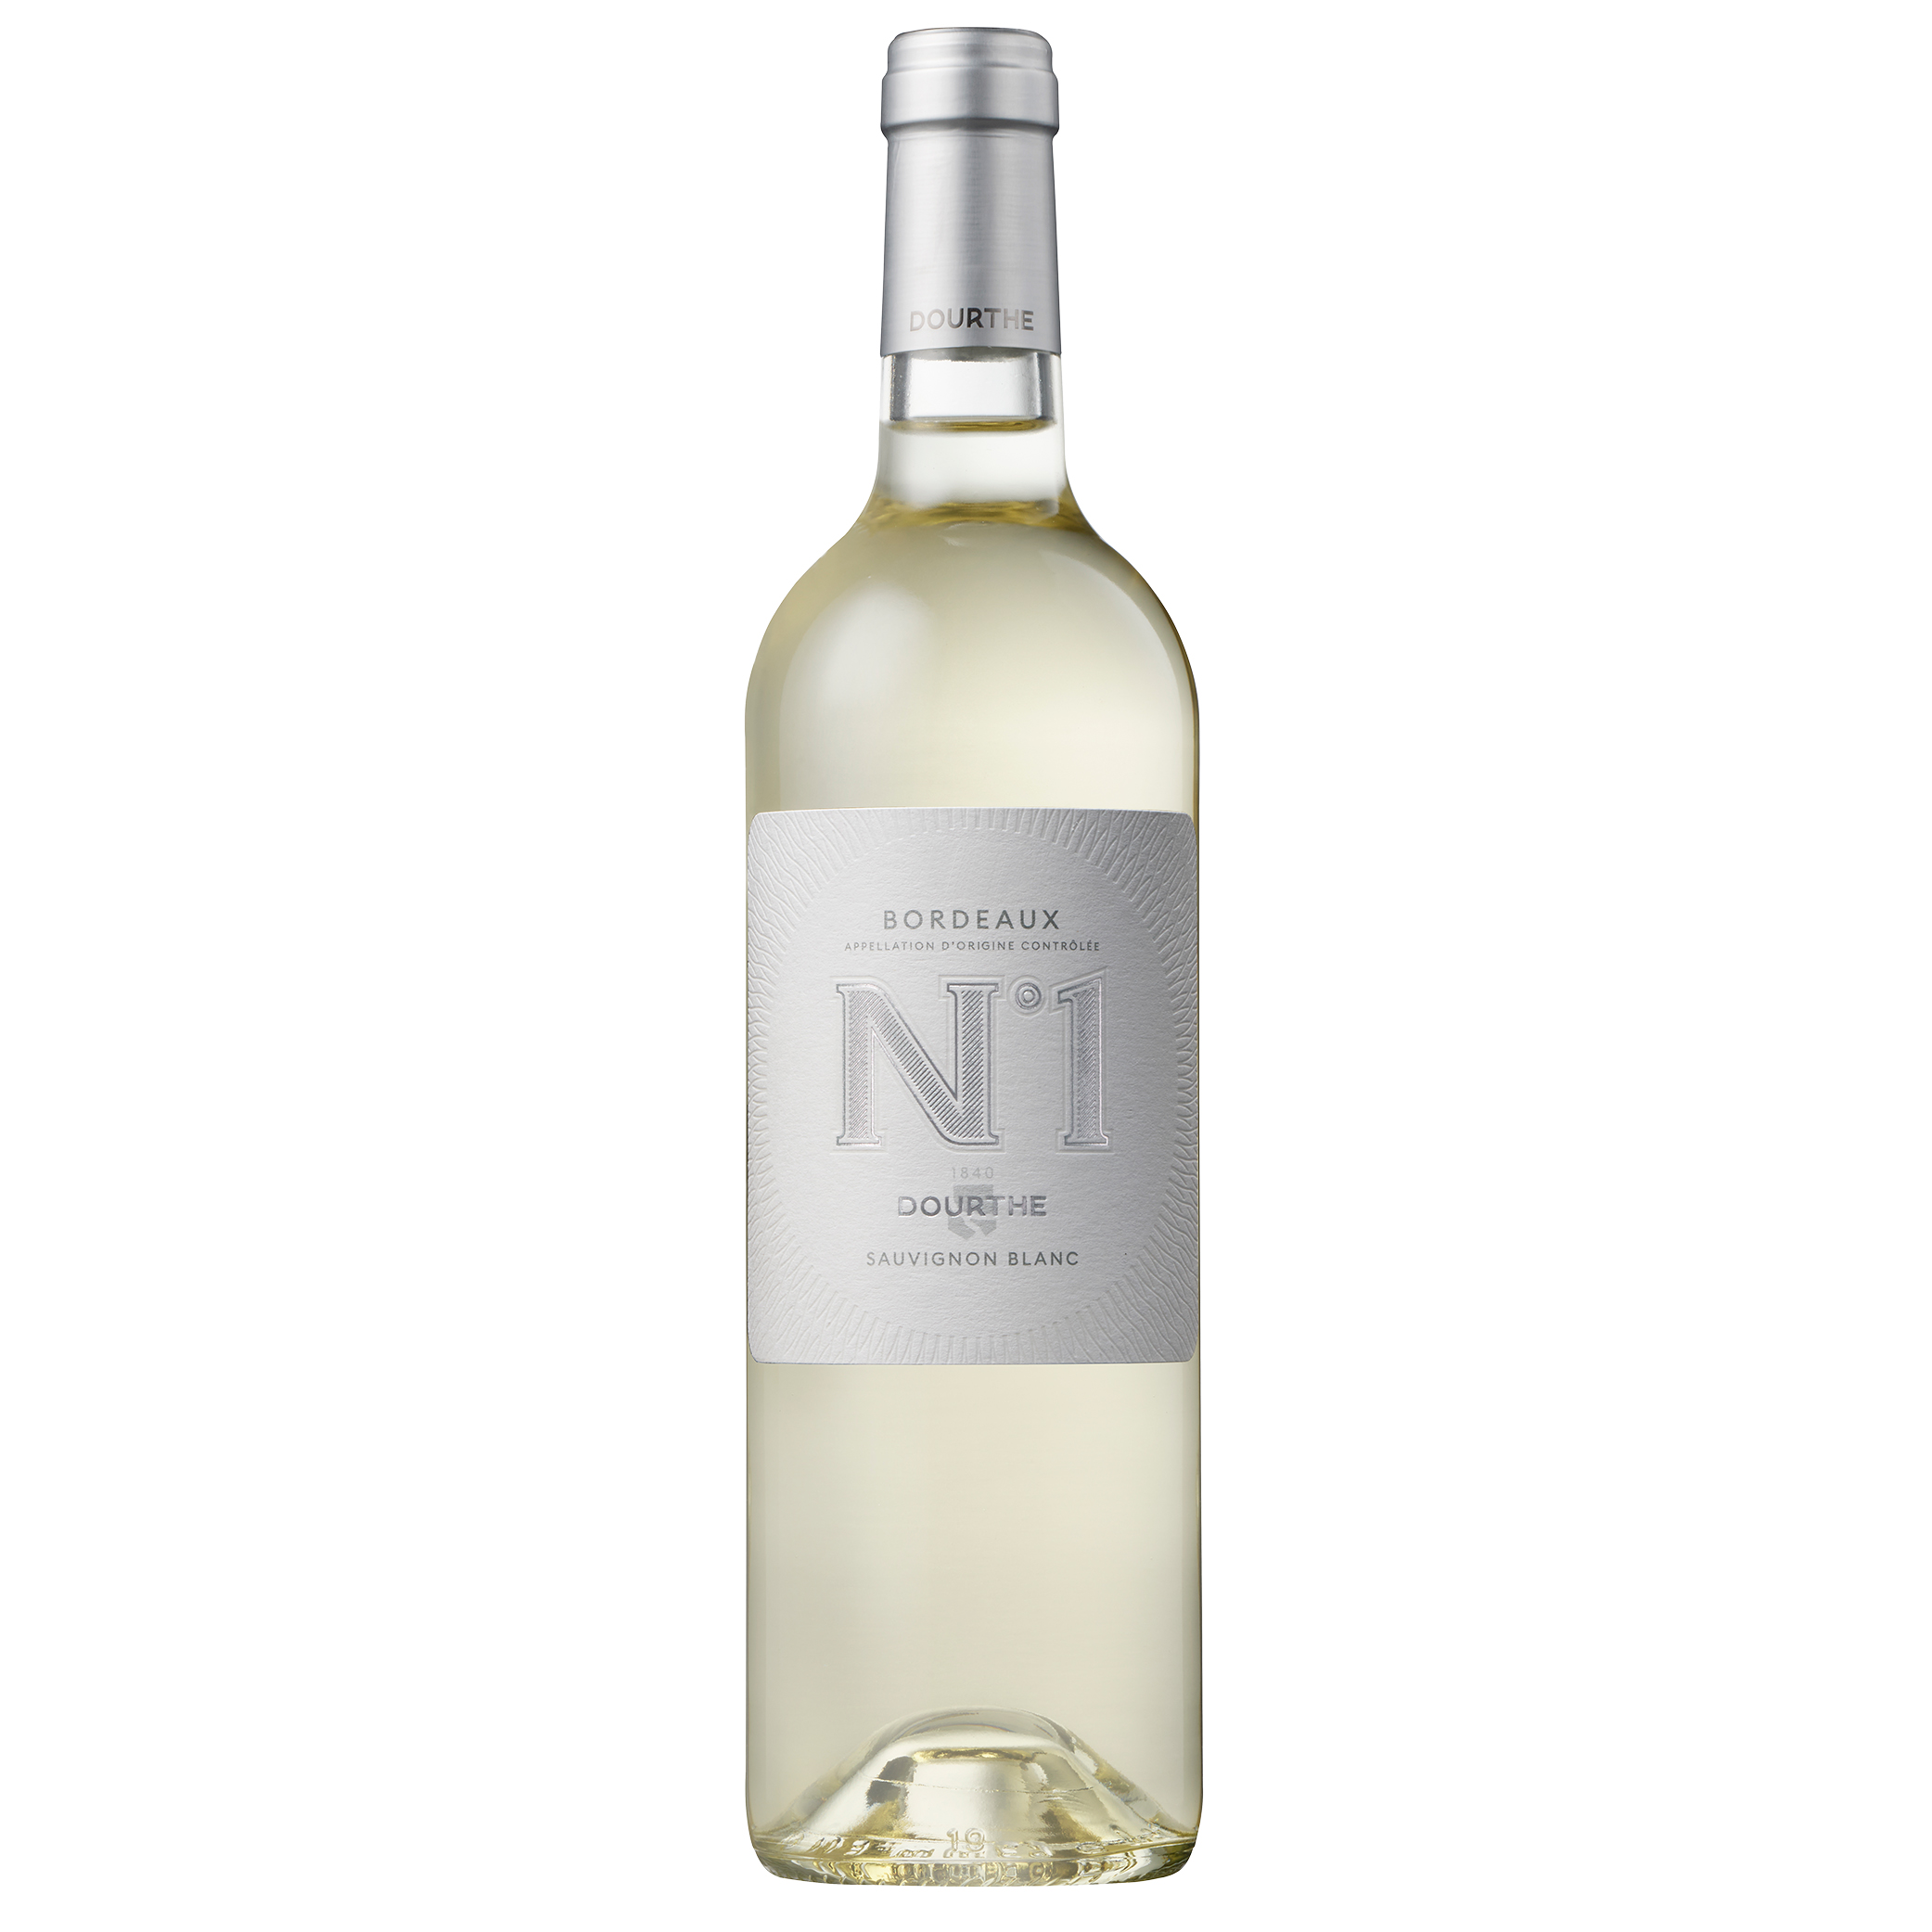 N°1 by Dourthe - Bordeaux Sauvignon Blanc - Pancaniaga Indoperkasa